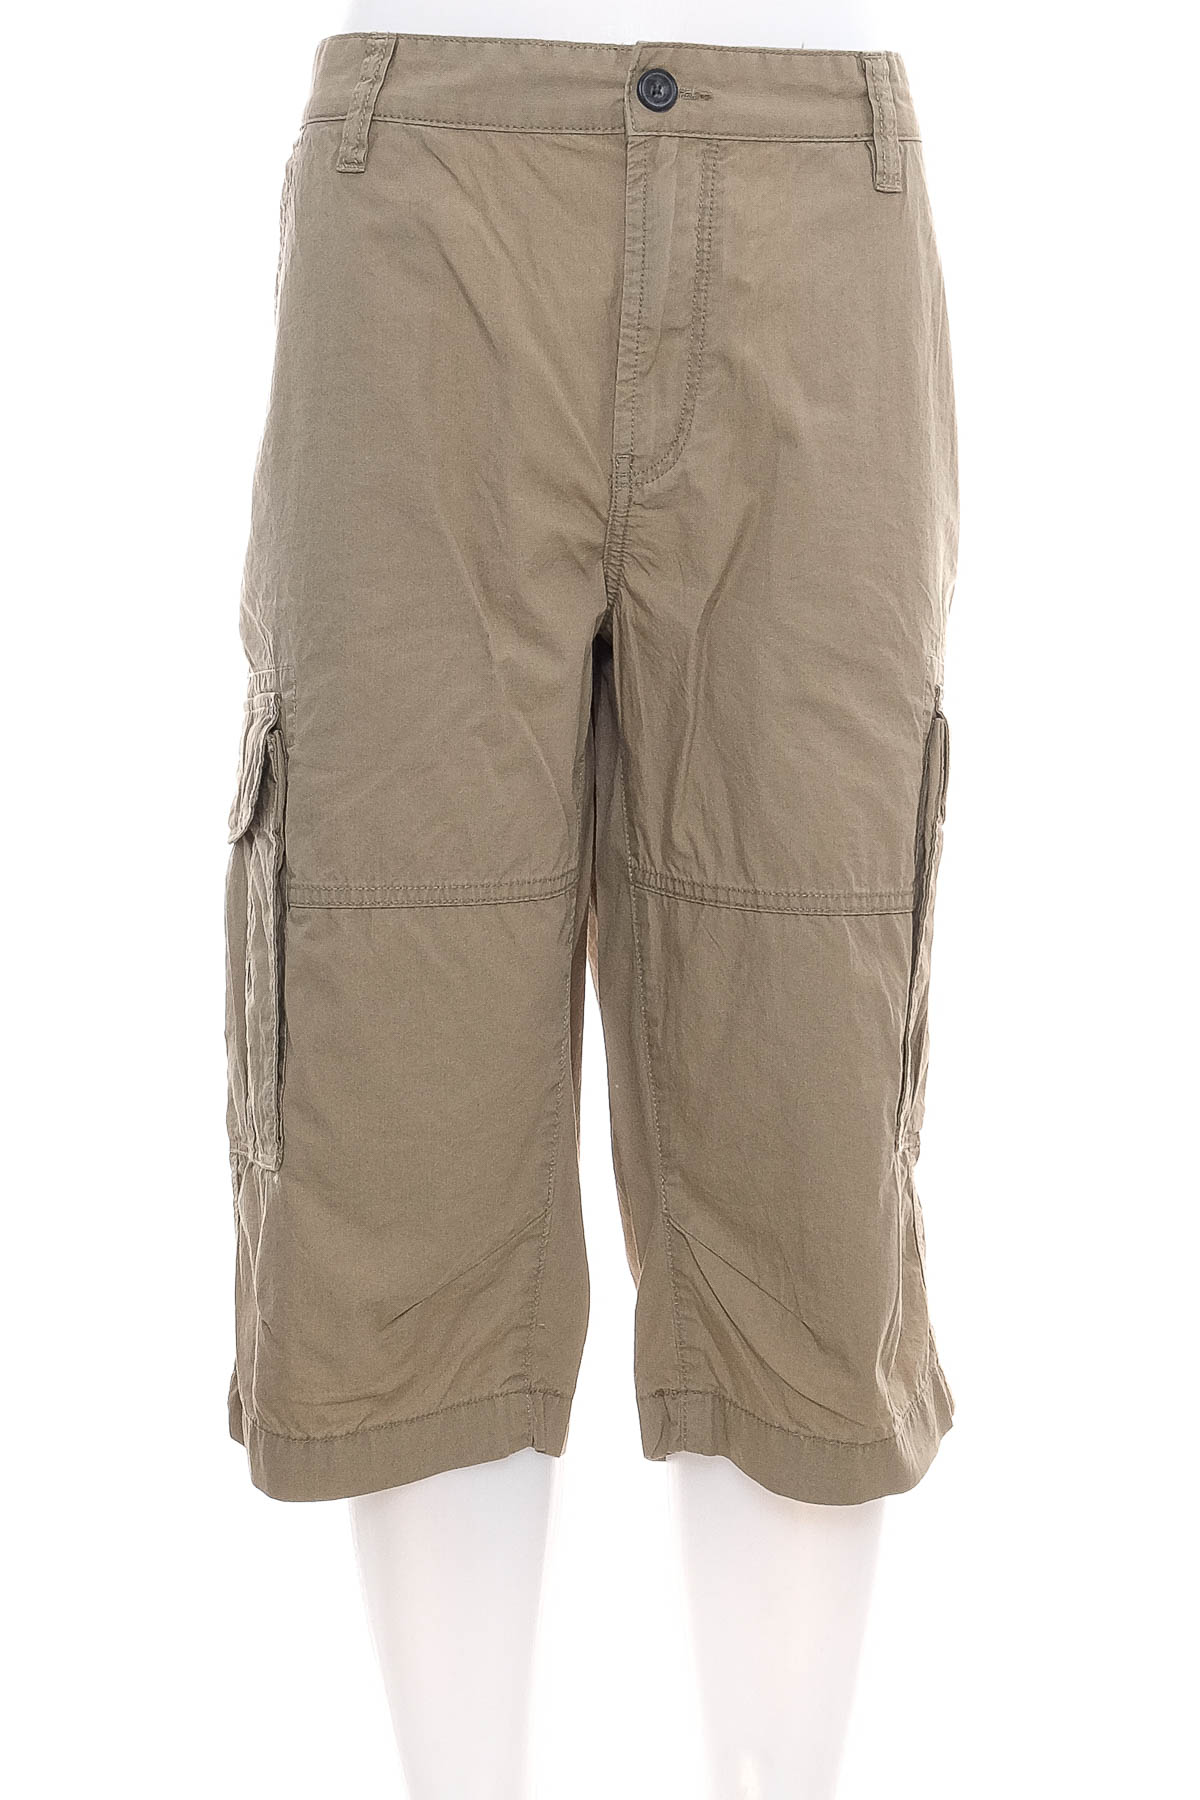 Men's shorts - CANDA - 0